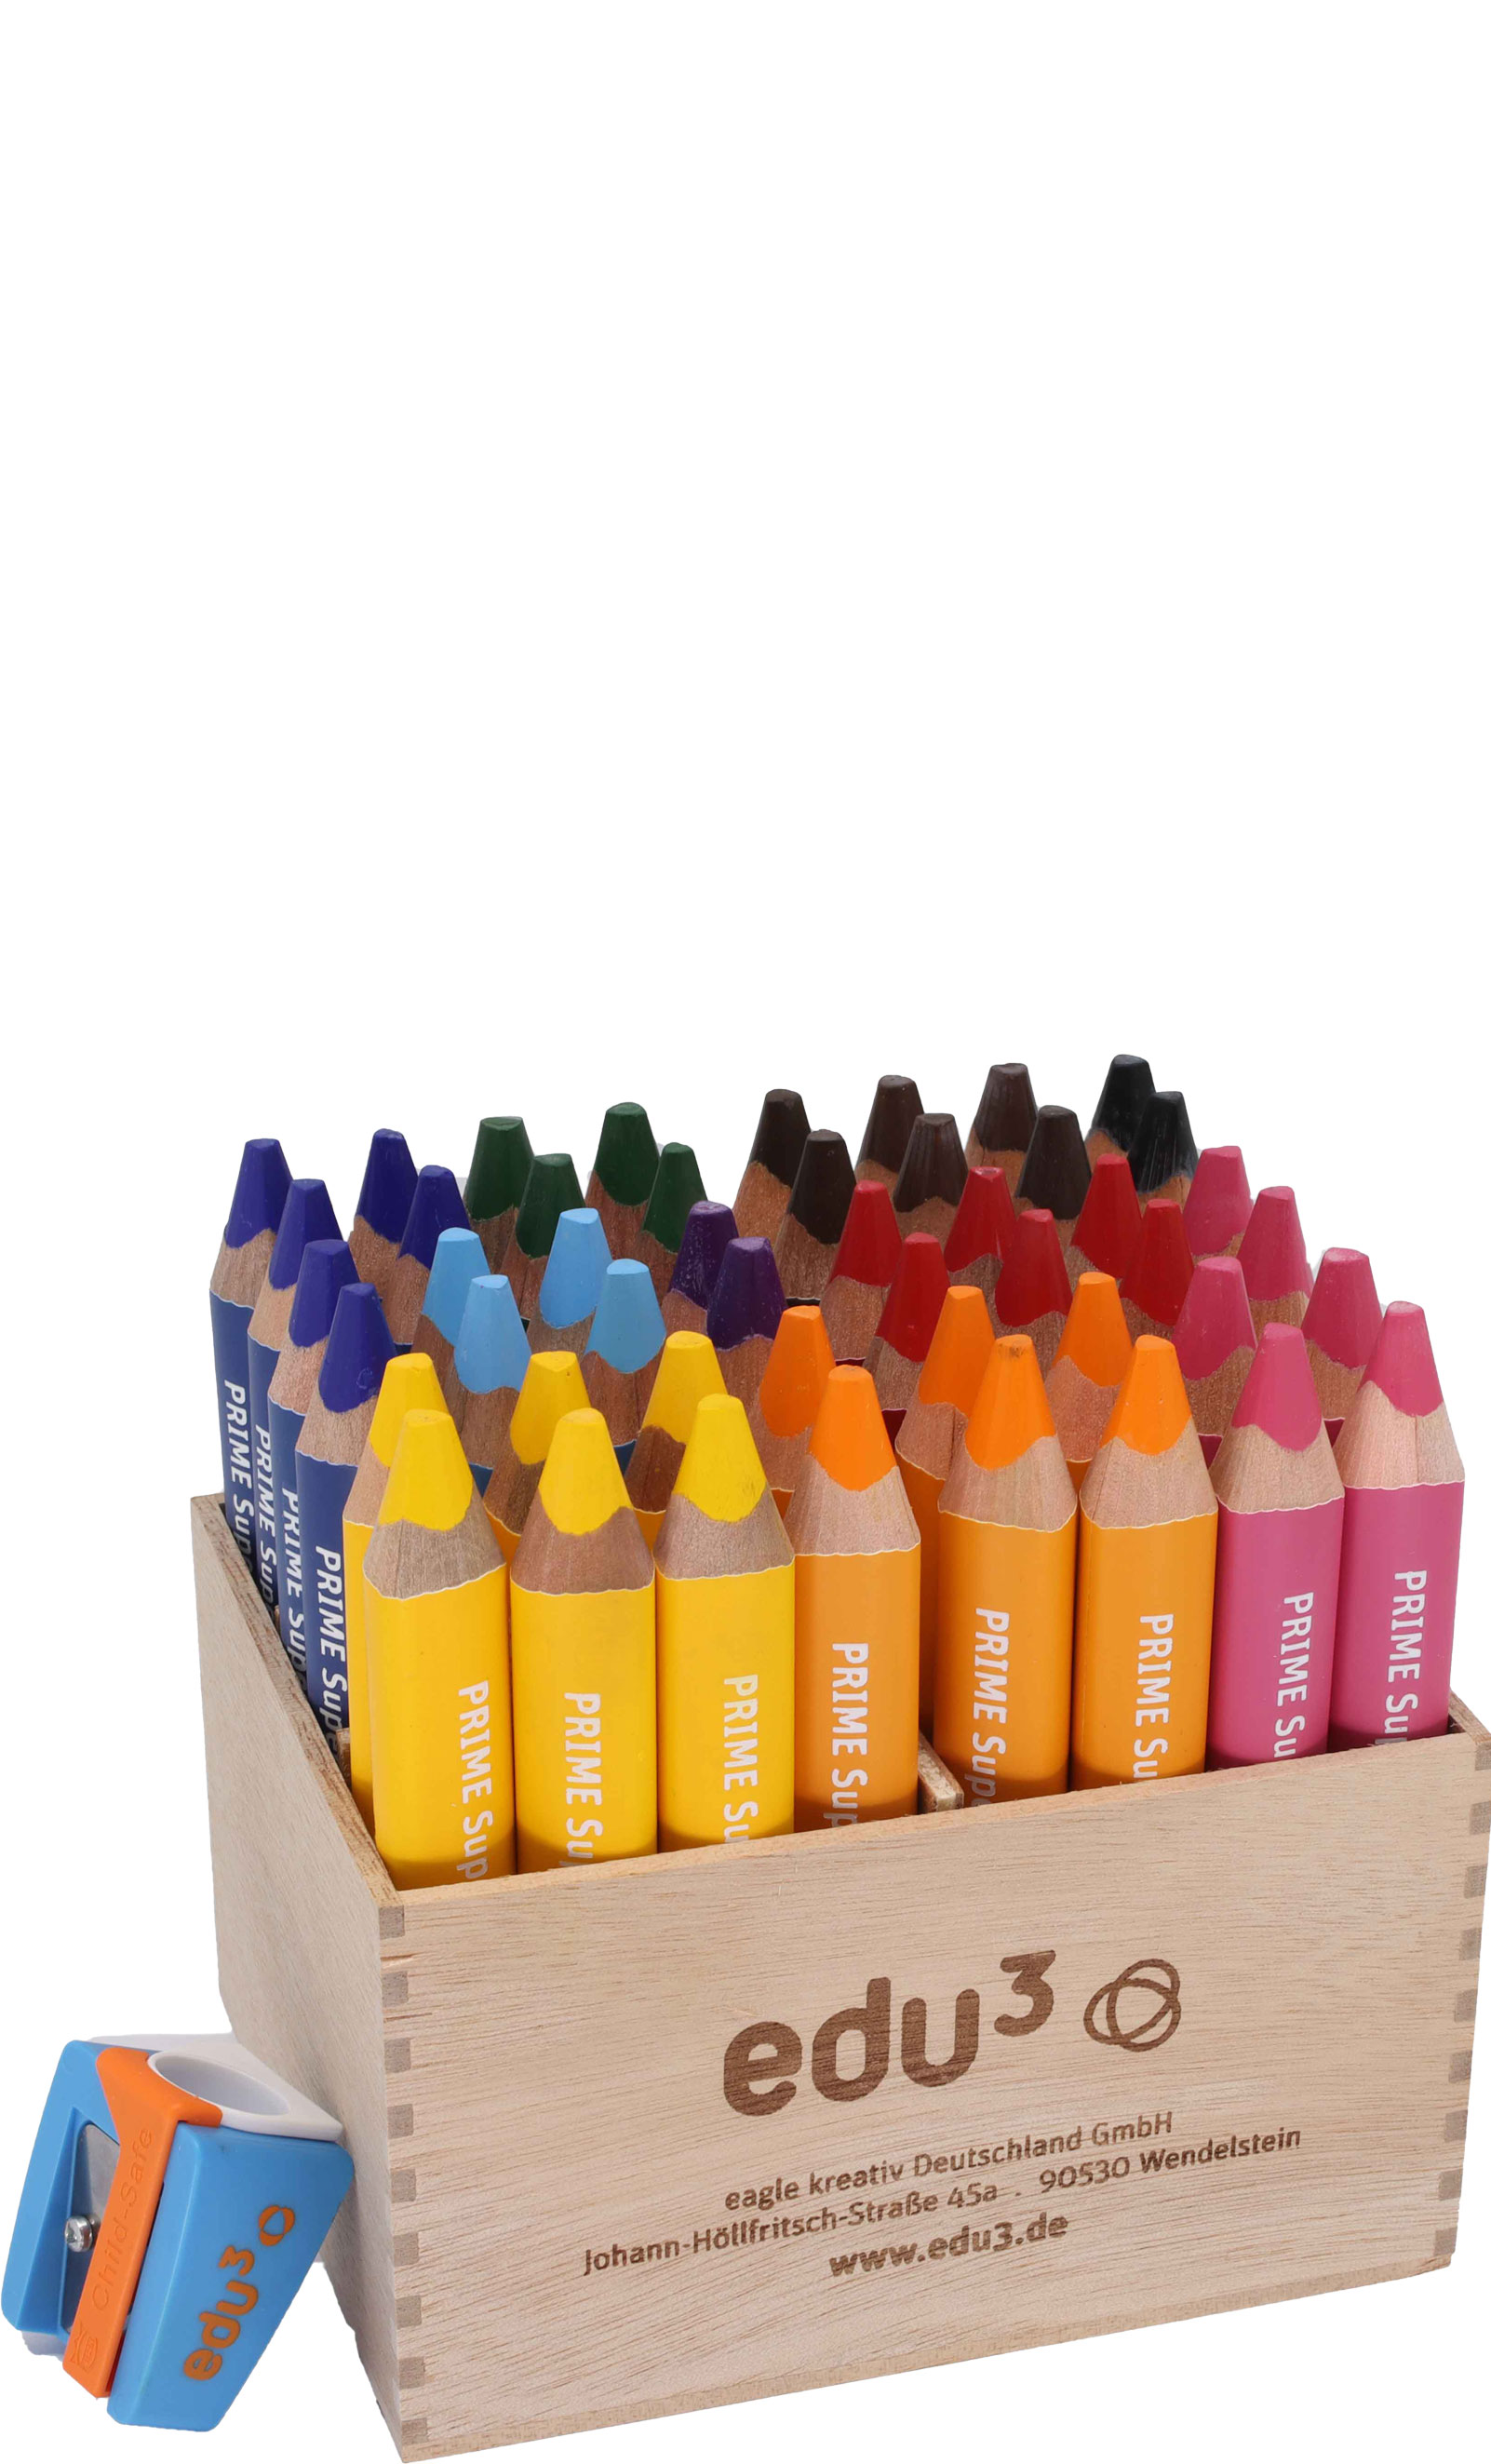 edu³ PRIME Super Jumbo colored pencils tri wooden display